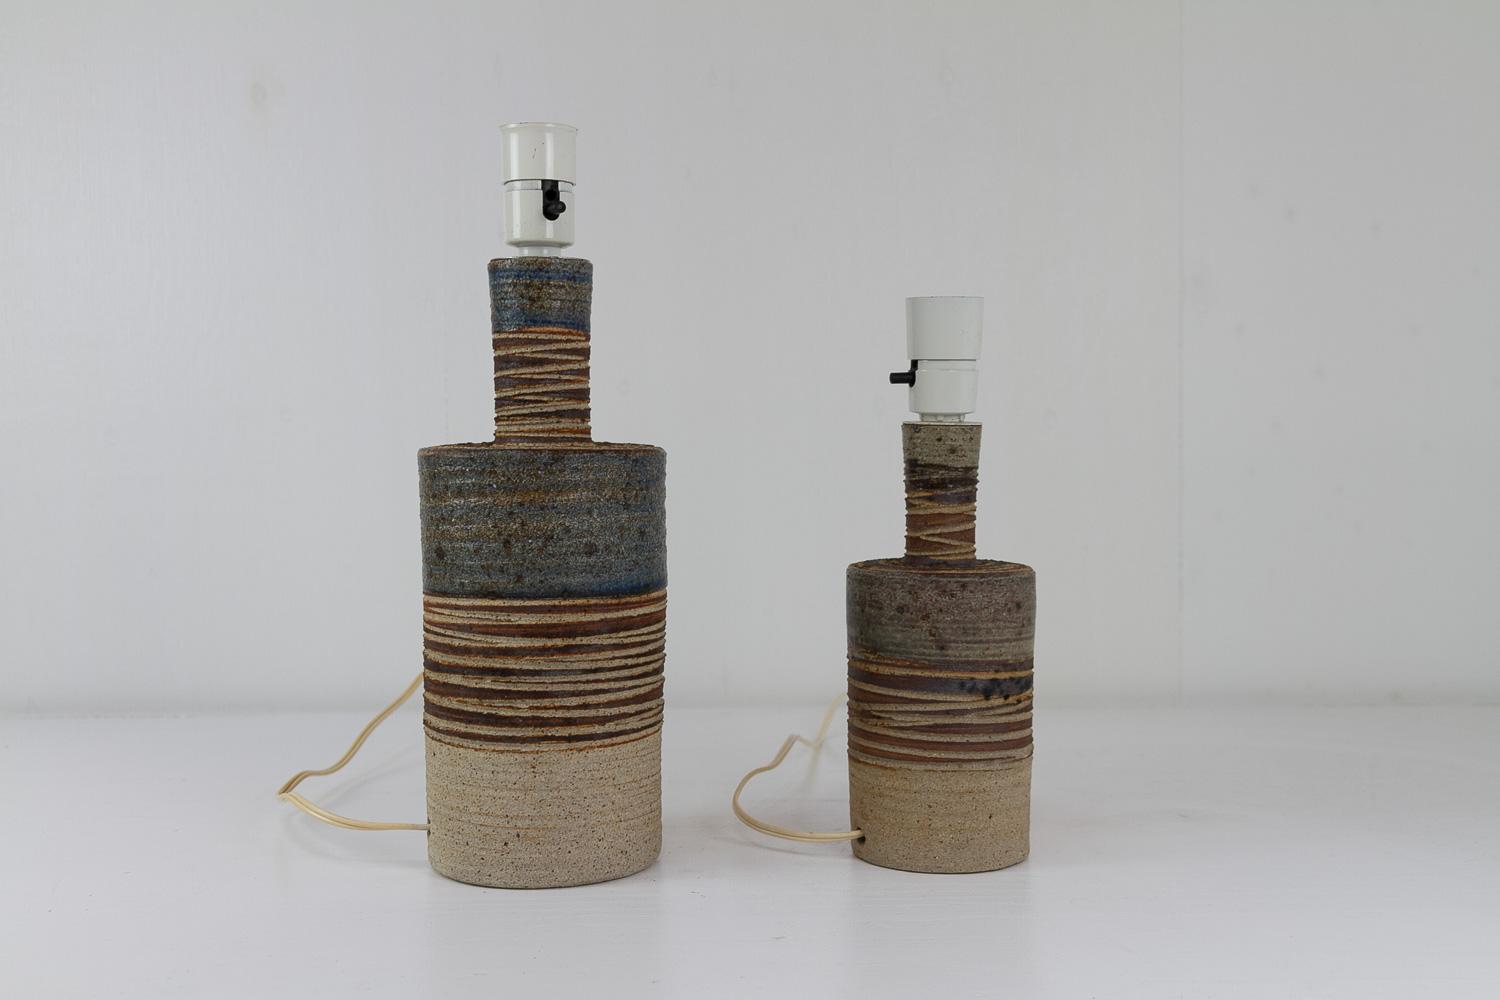 Danish Modern Tue Poulsen Ceramic Table Lamps, 1960s. Set of 2. For Sale 2